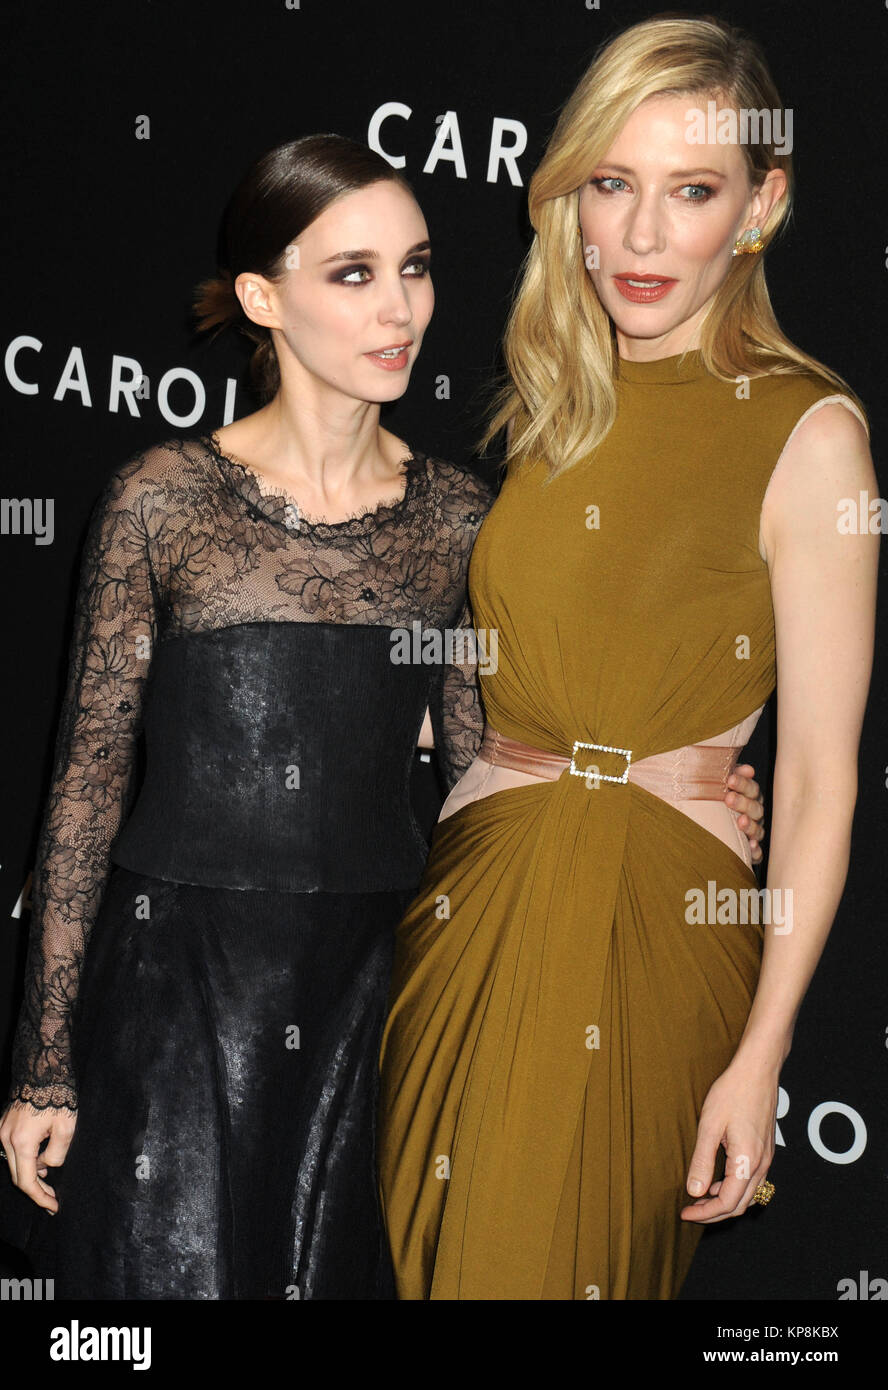 CELEBRITY PHOTOS: Cate Blanchett, Rooney Mara of 'Carol